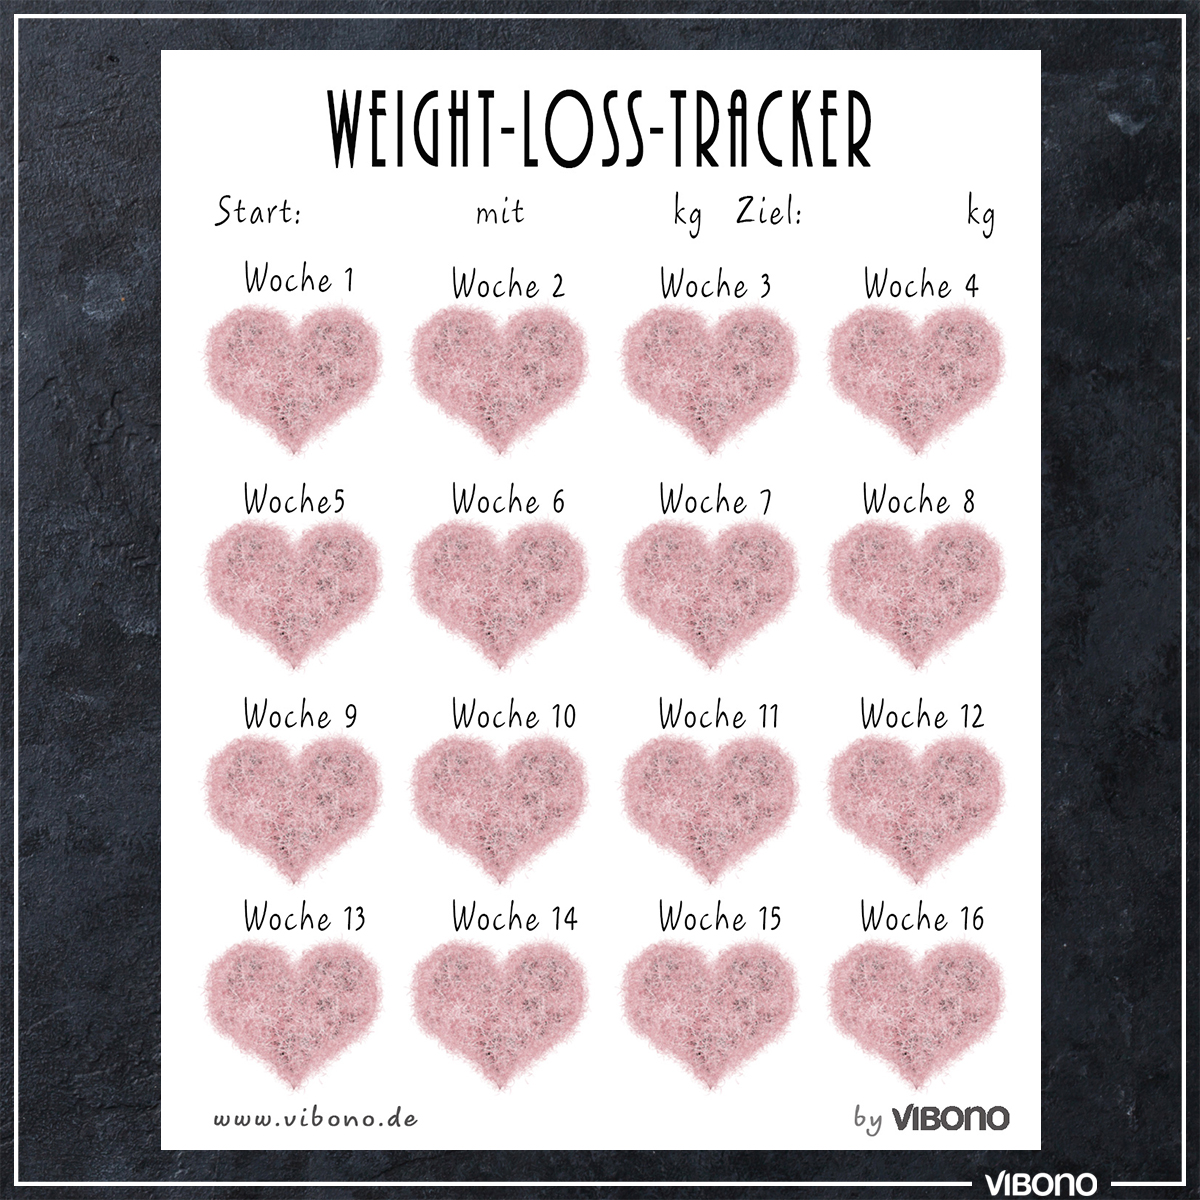 Weight-Loss-Tracker